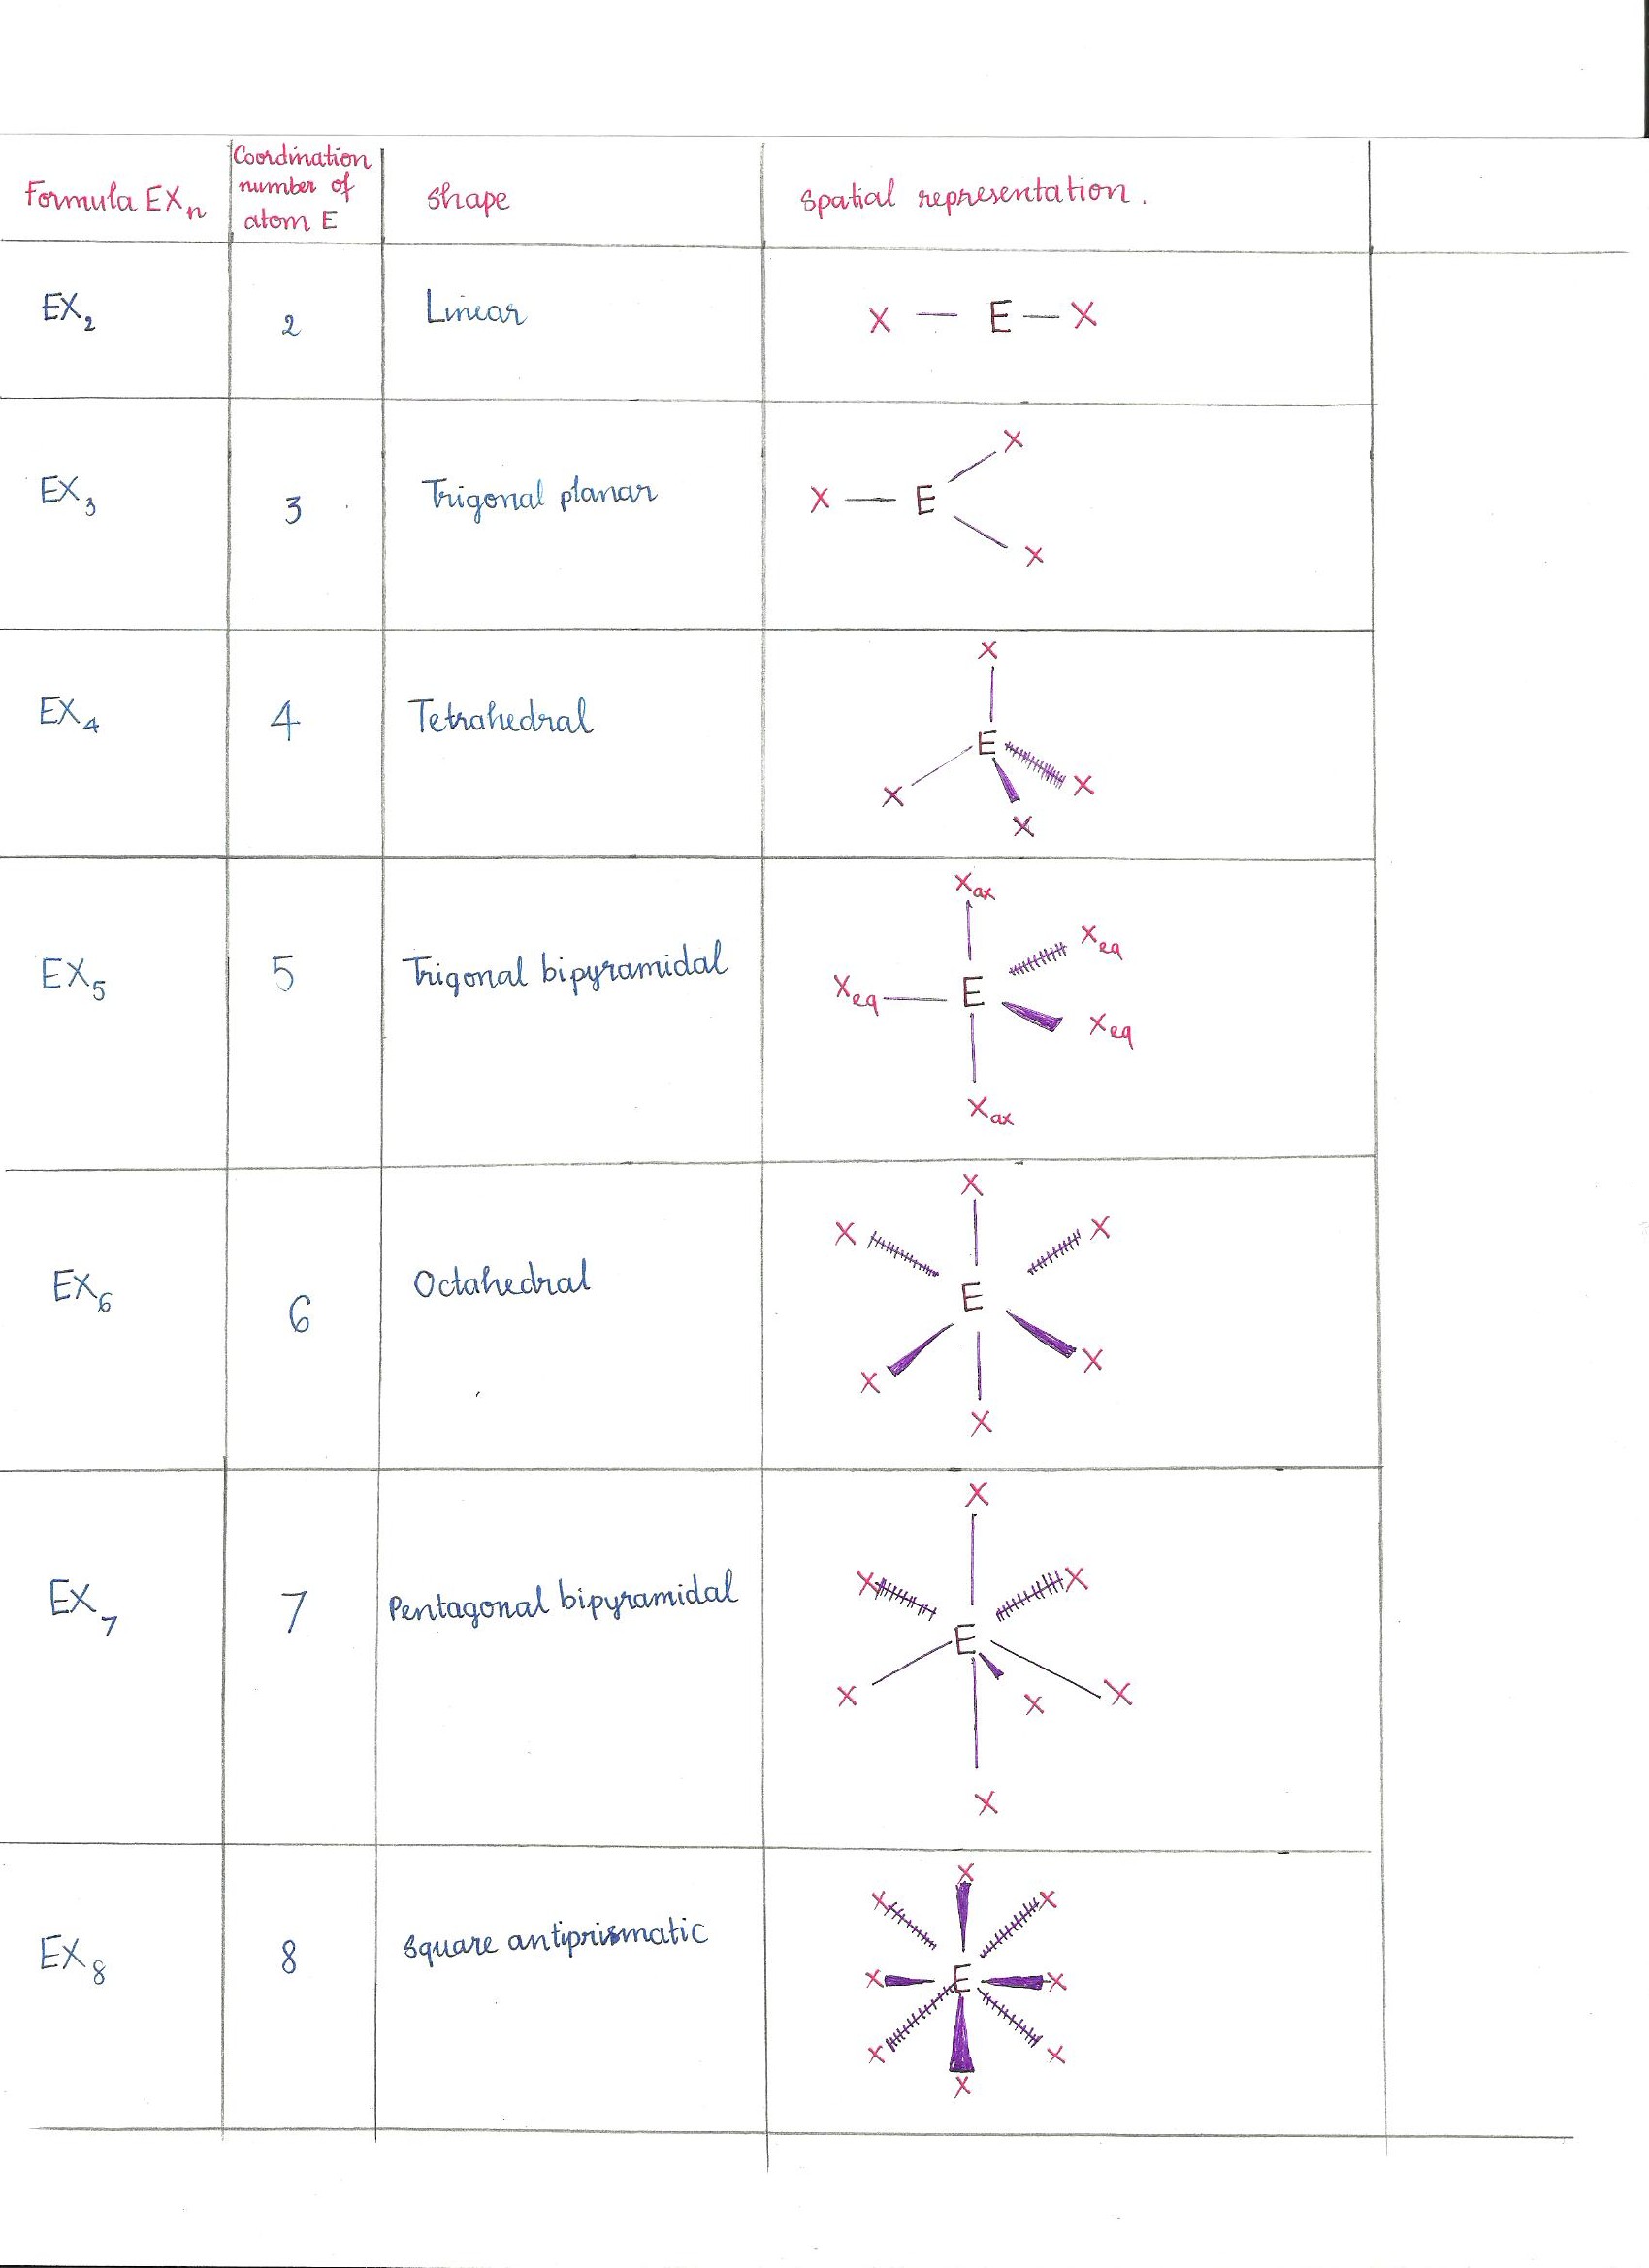 Chemistry Molecular Shapes Chart